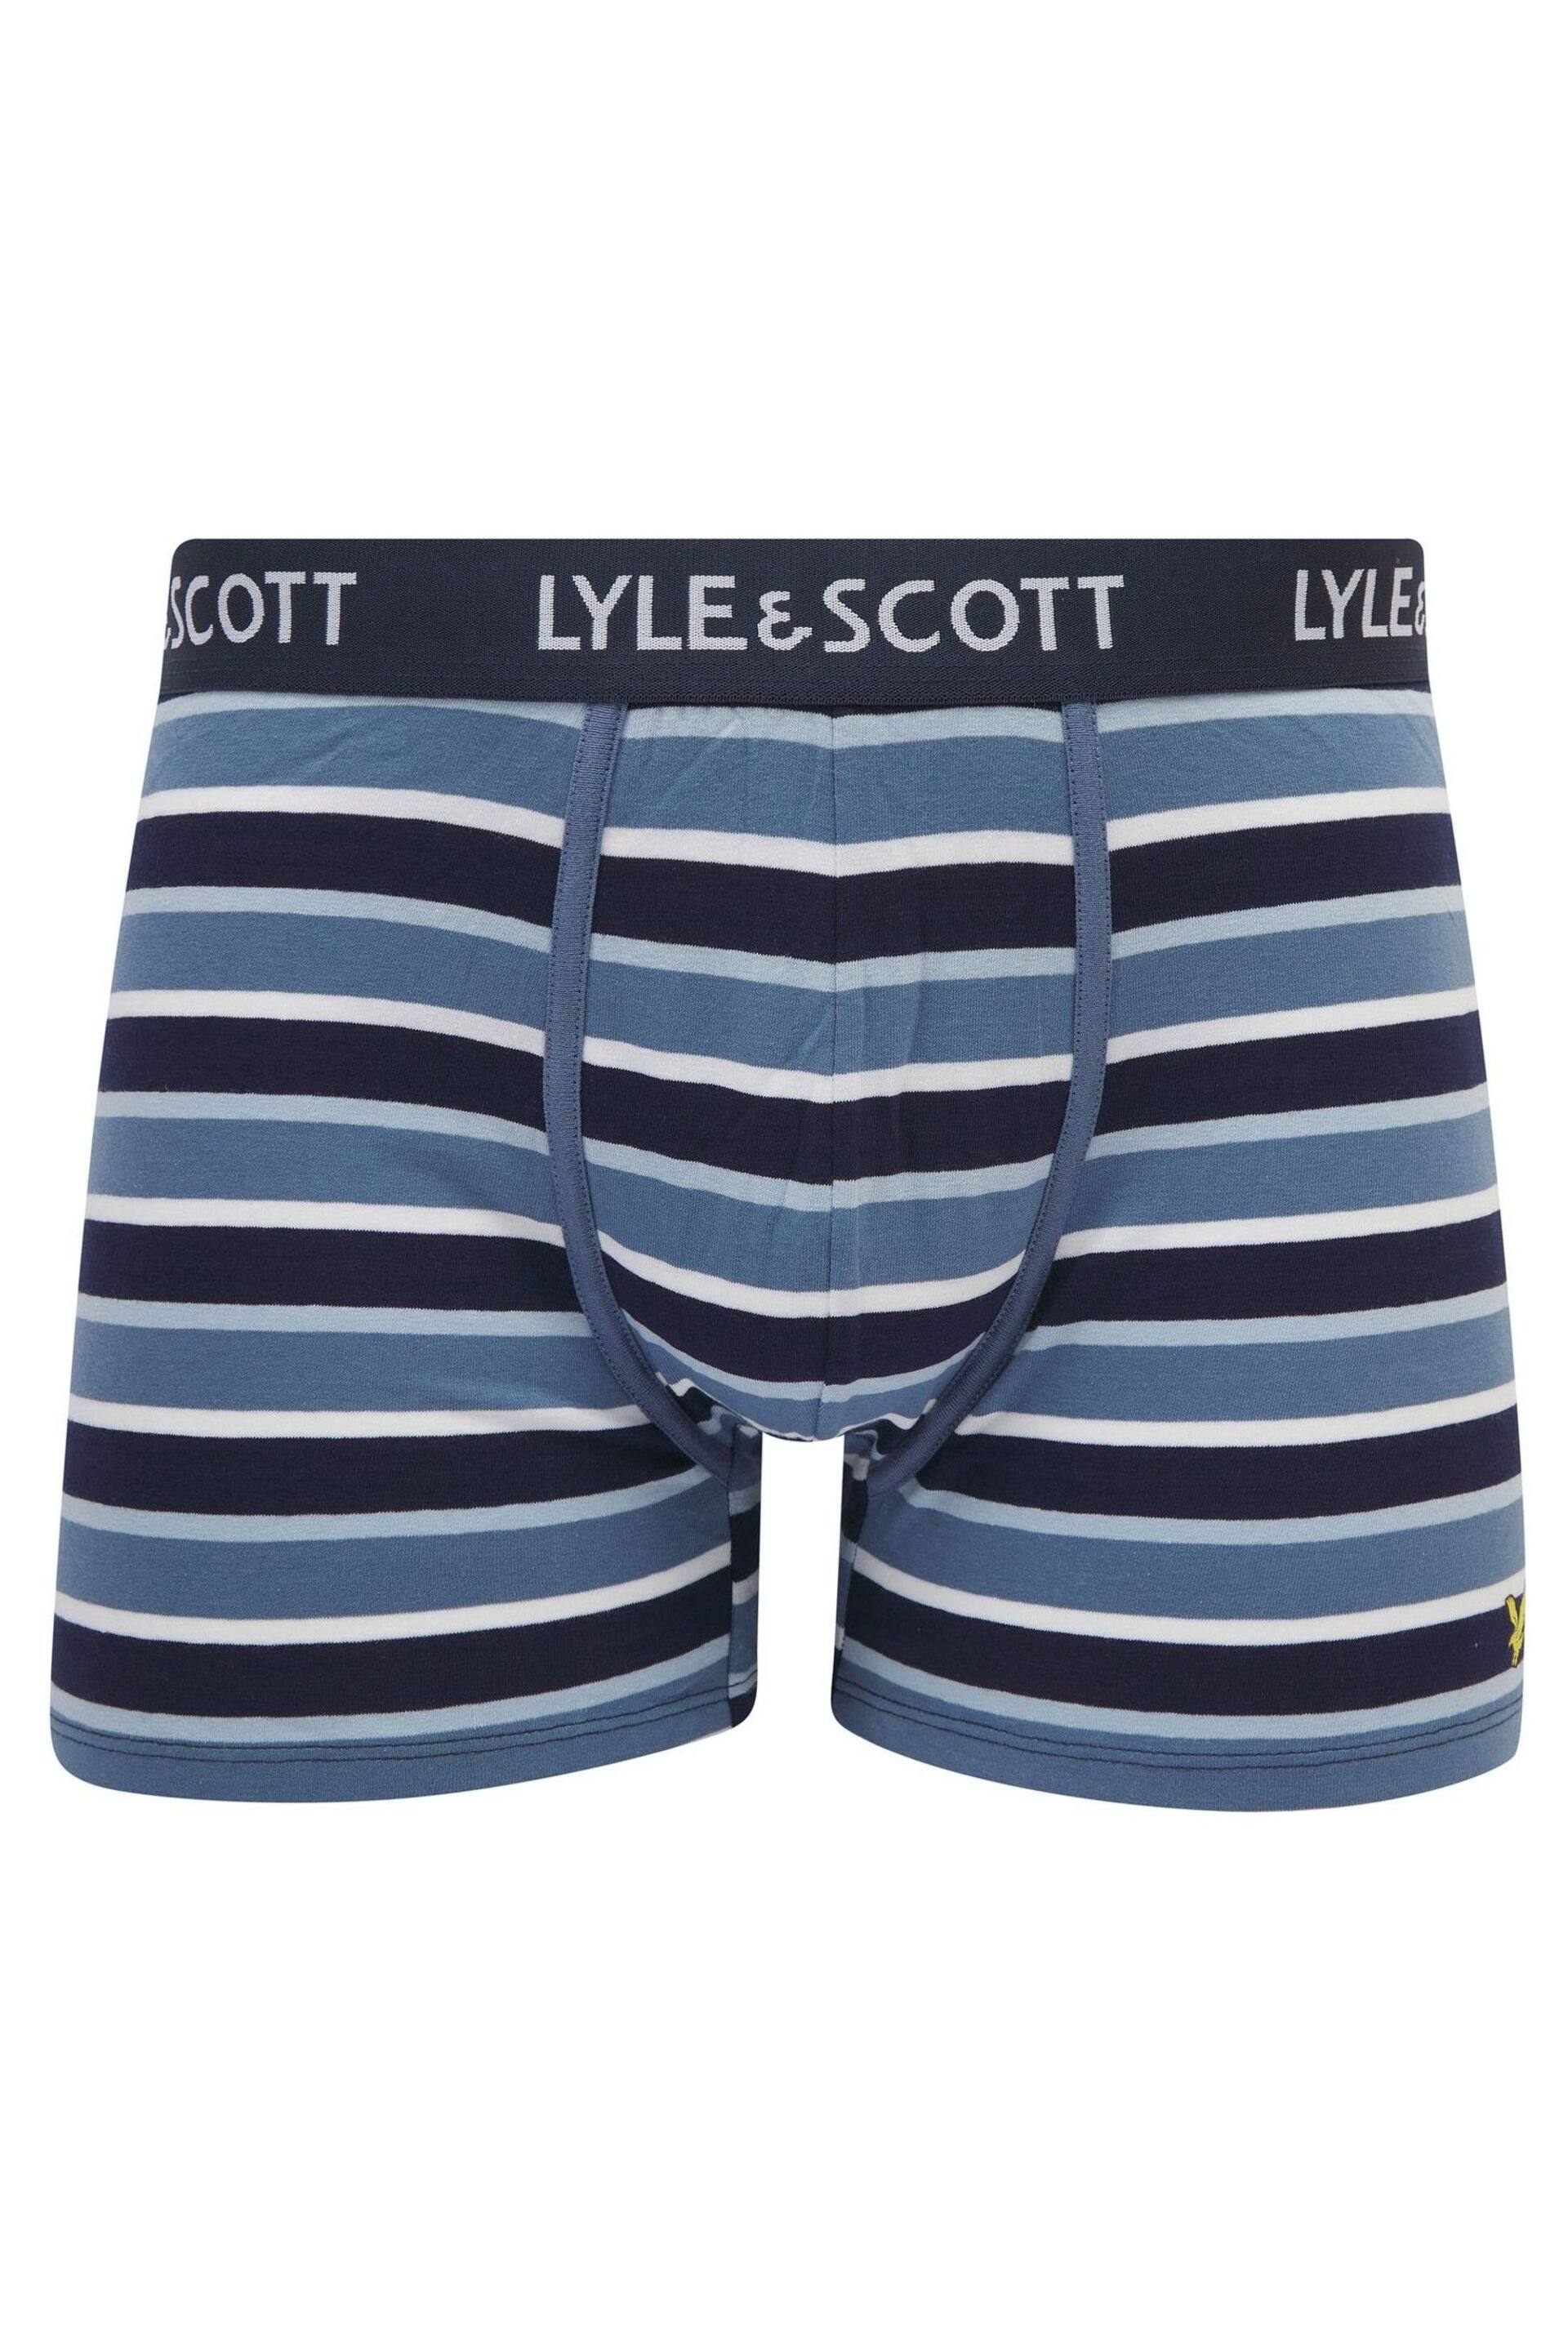 Lyle & Scott Ethan Premium White Underwear Trunks 3 Pack - Image 3 of 4